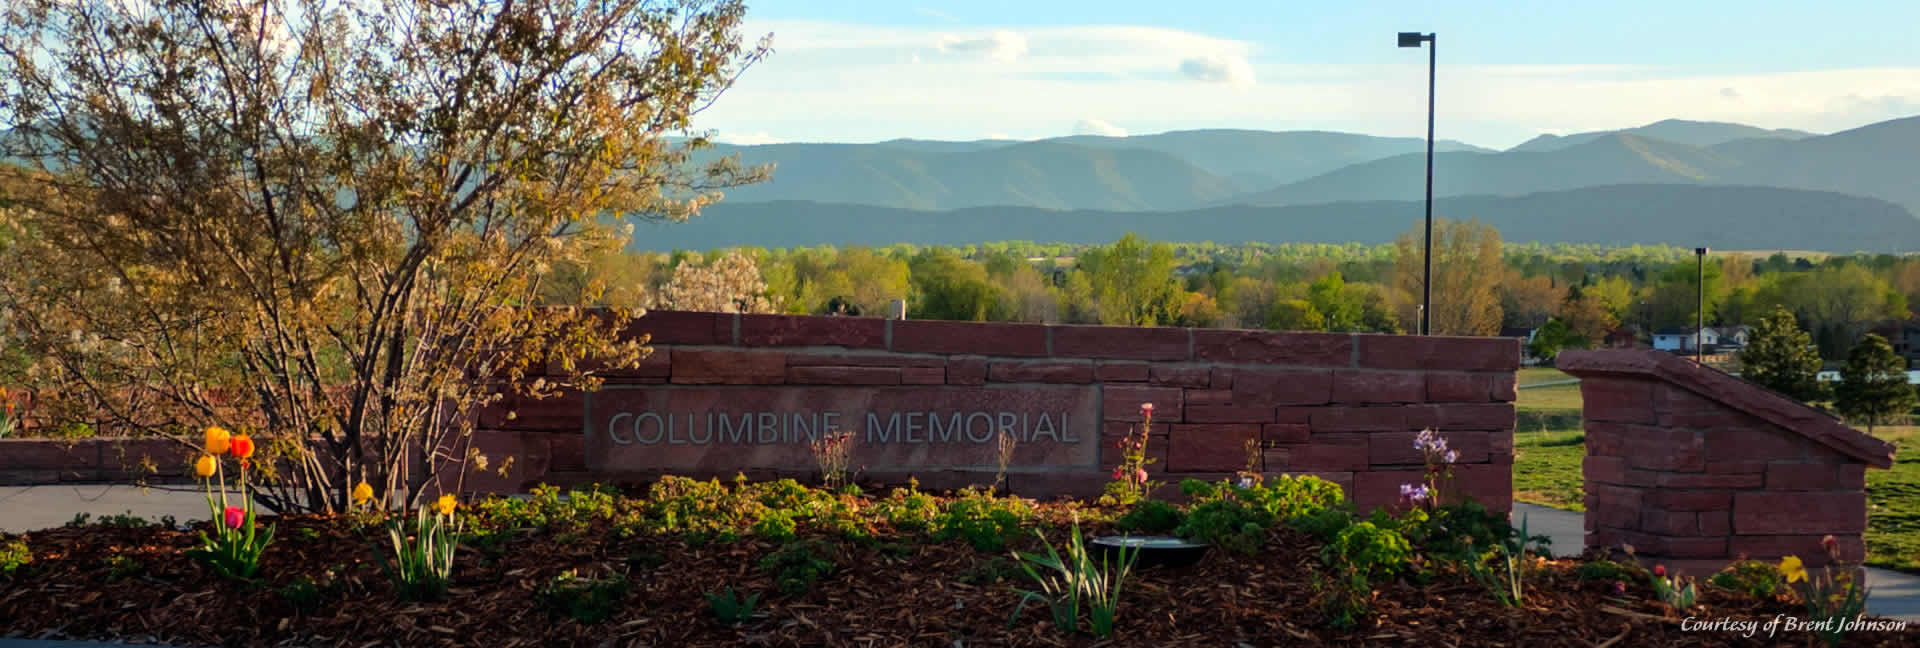 Entrance to the Columbine Memorial